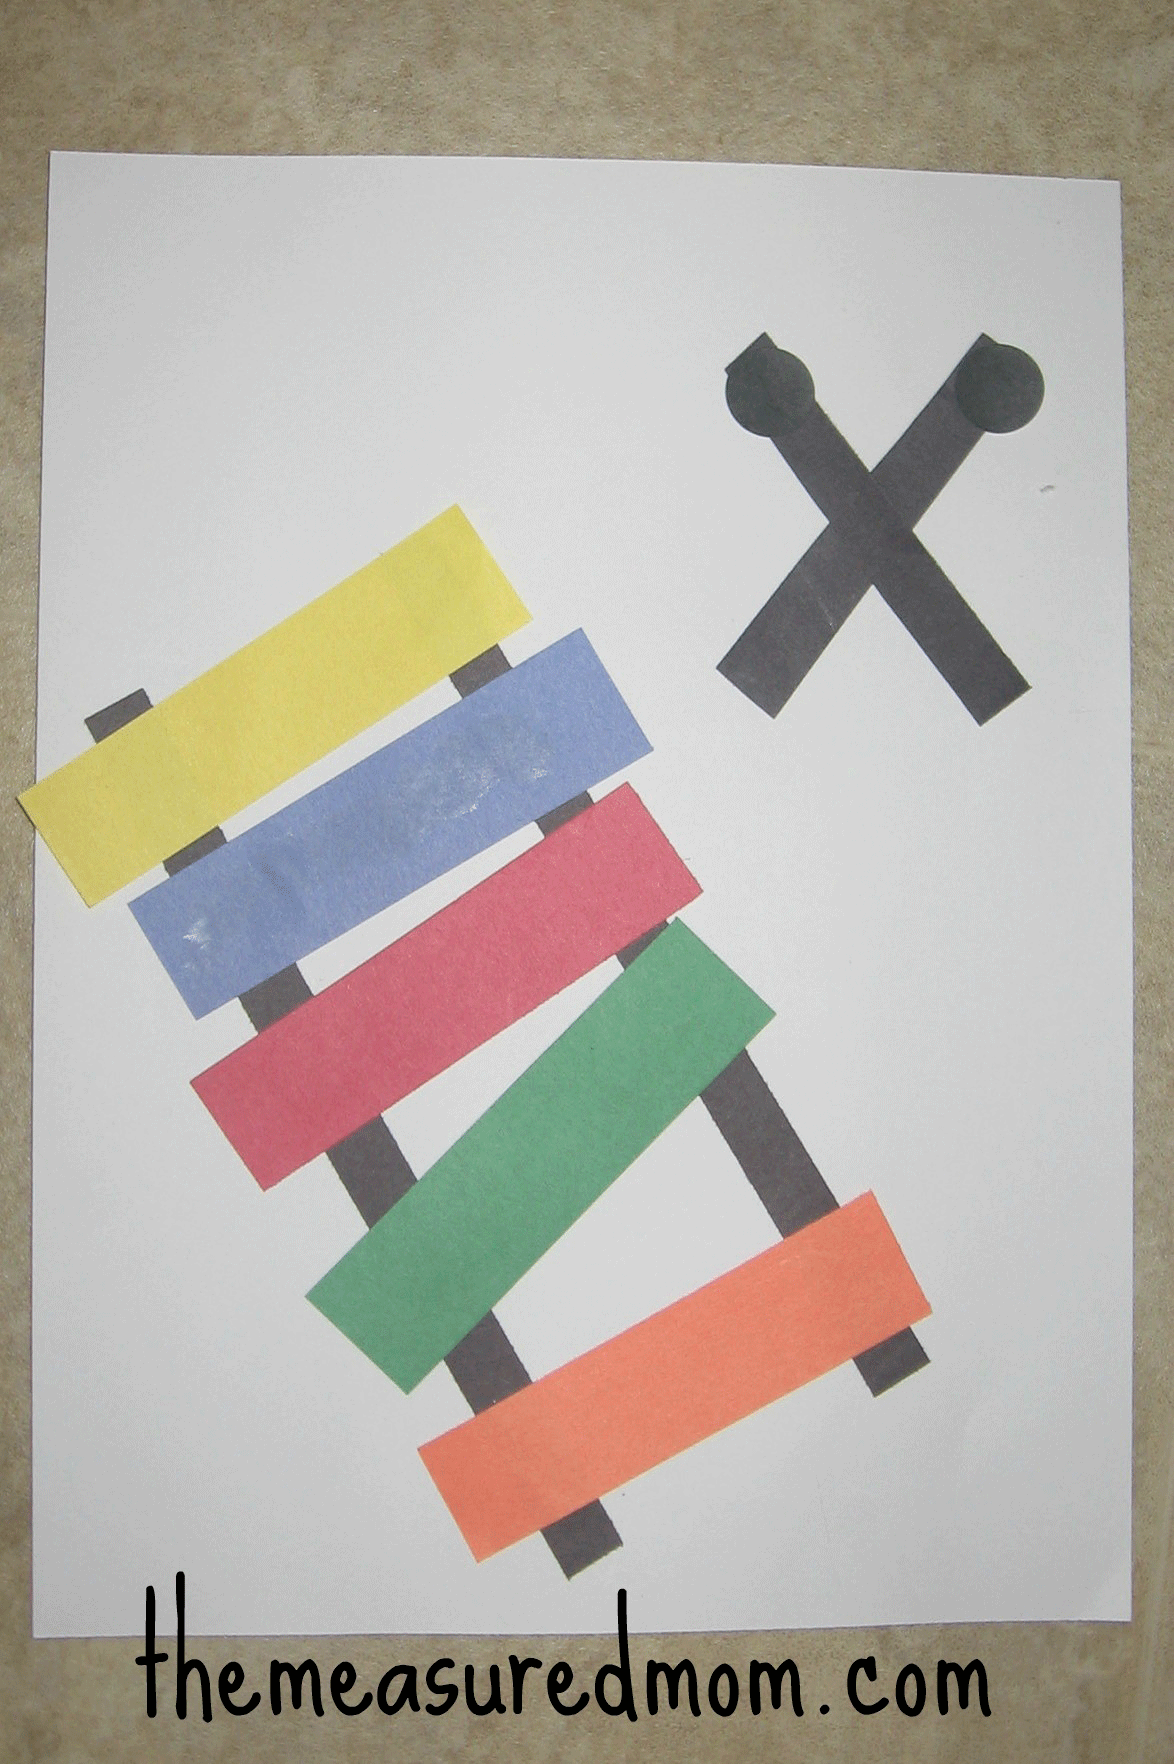 letter x crafts